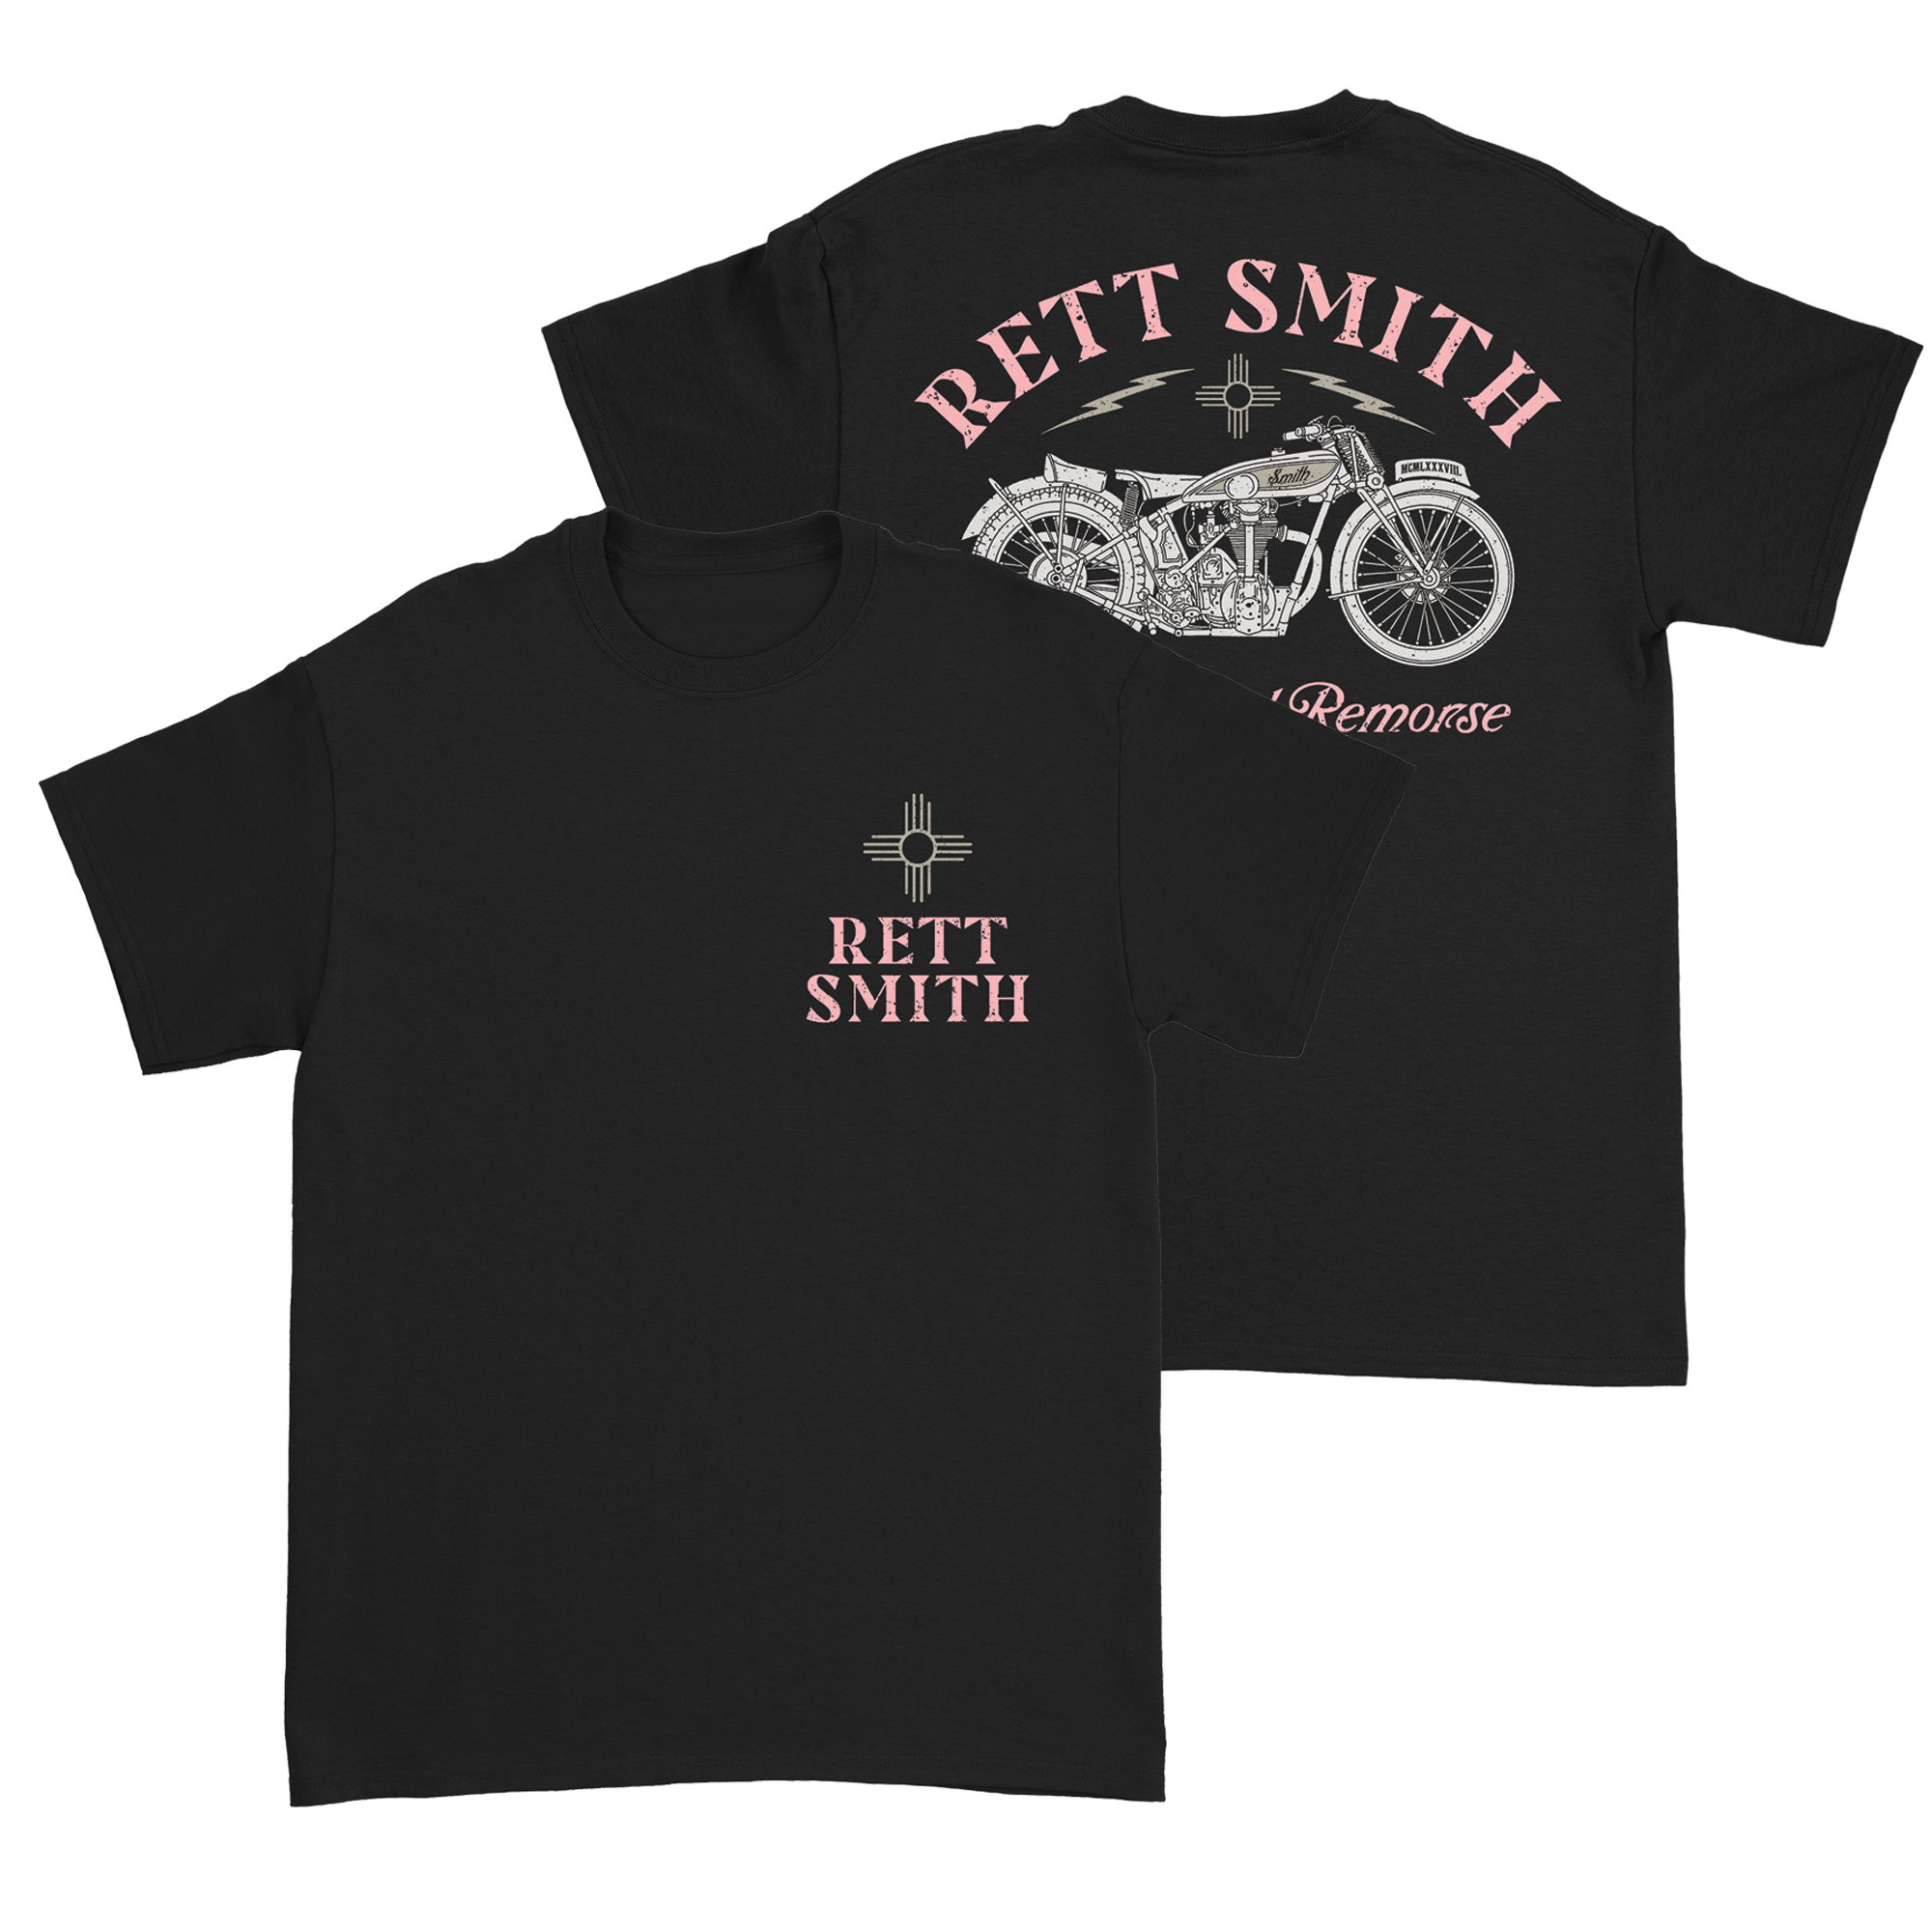 Rett Smith - Motorcycle Tee - Black